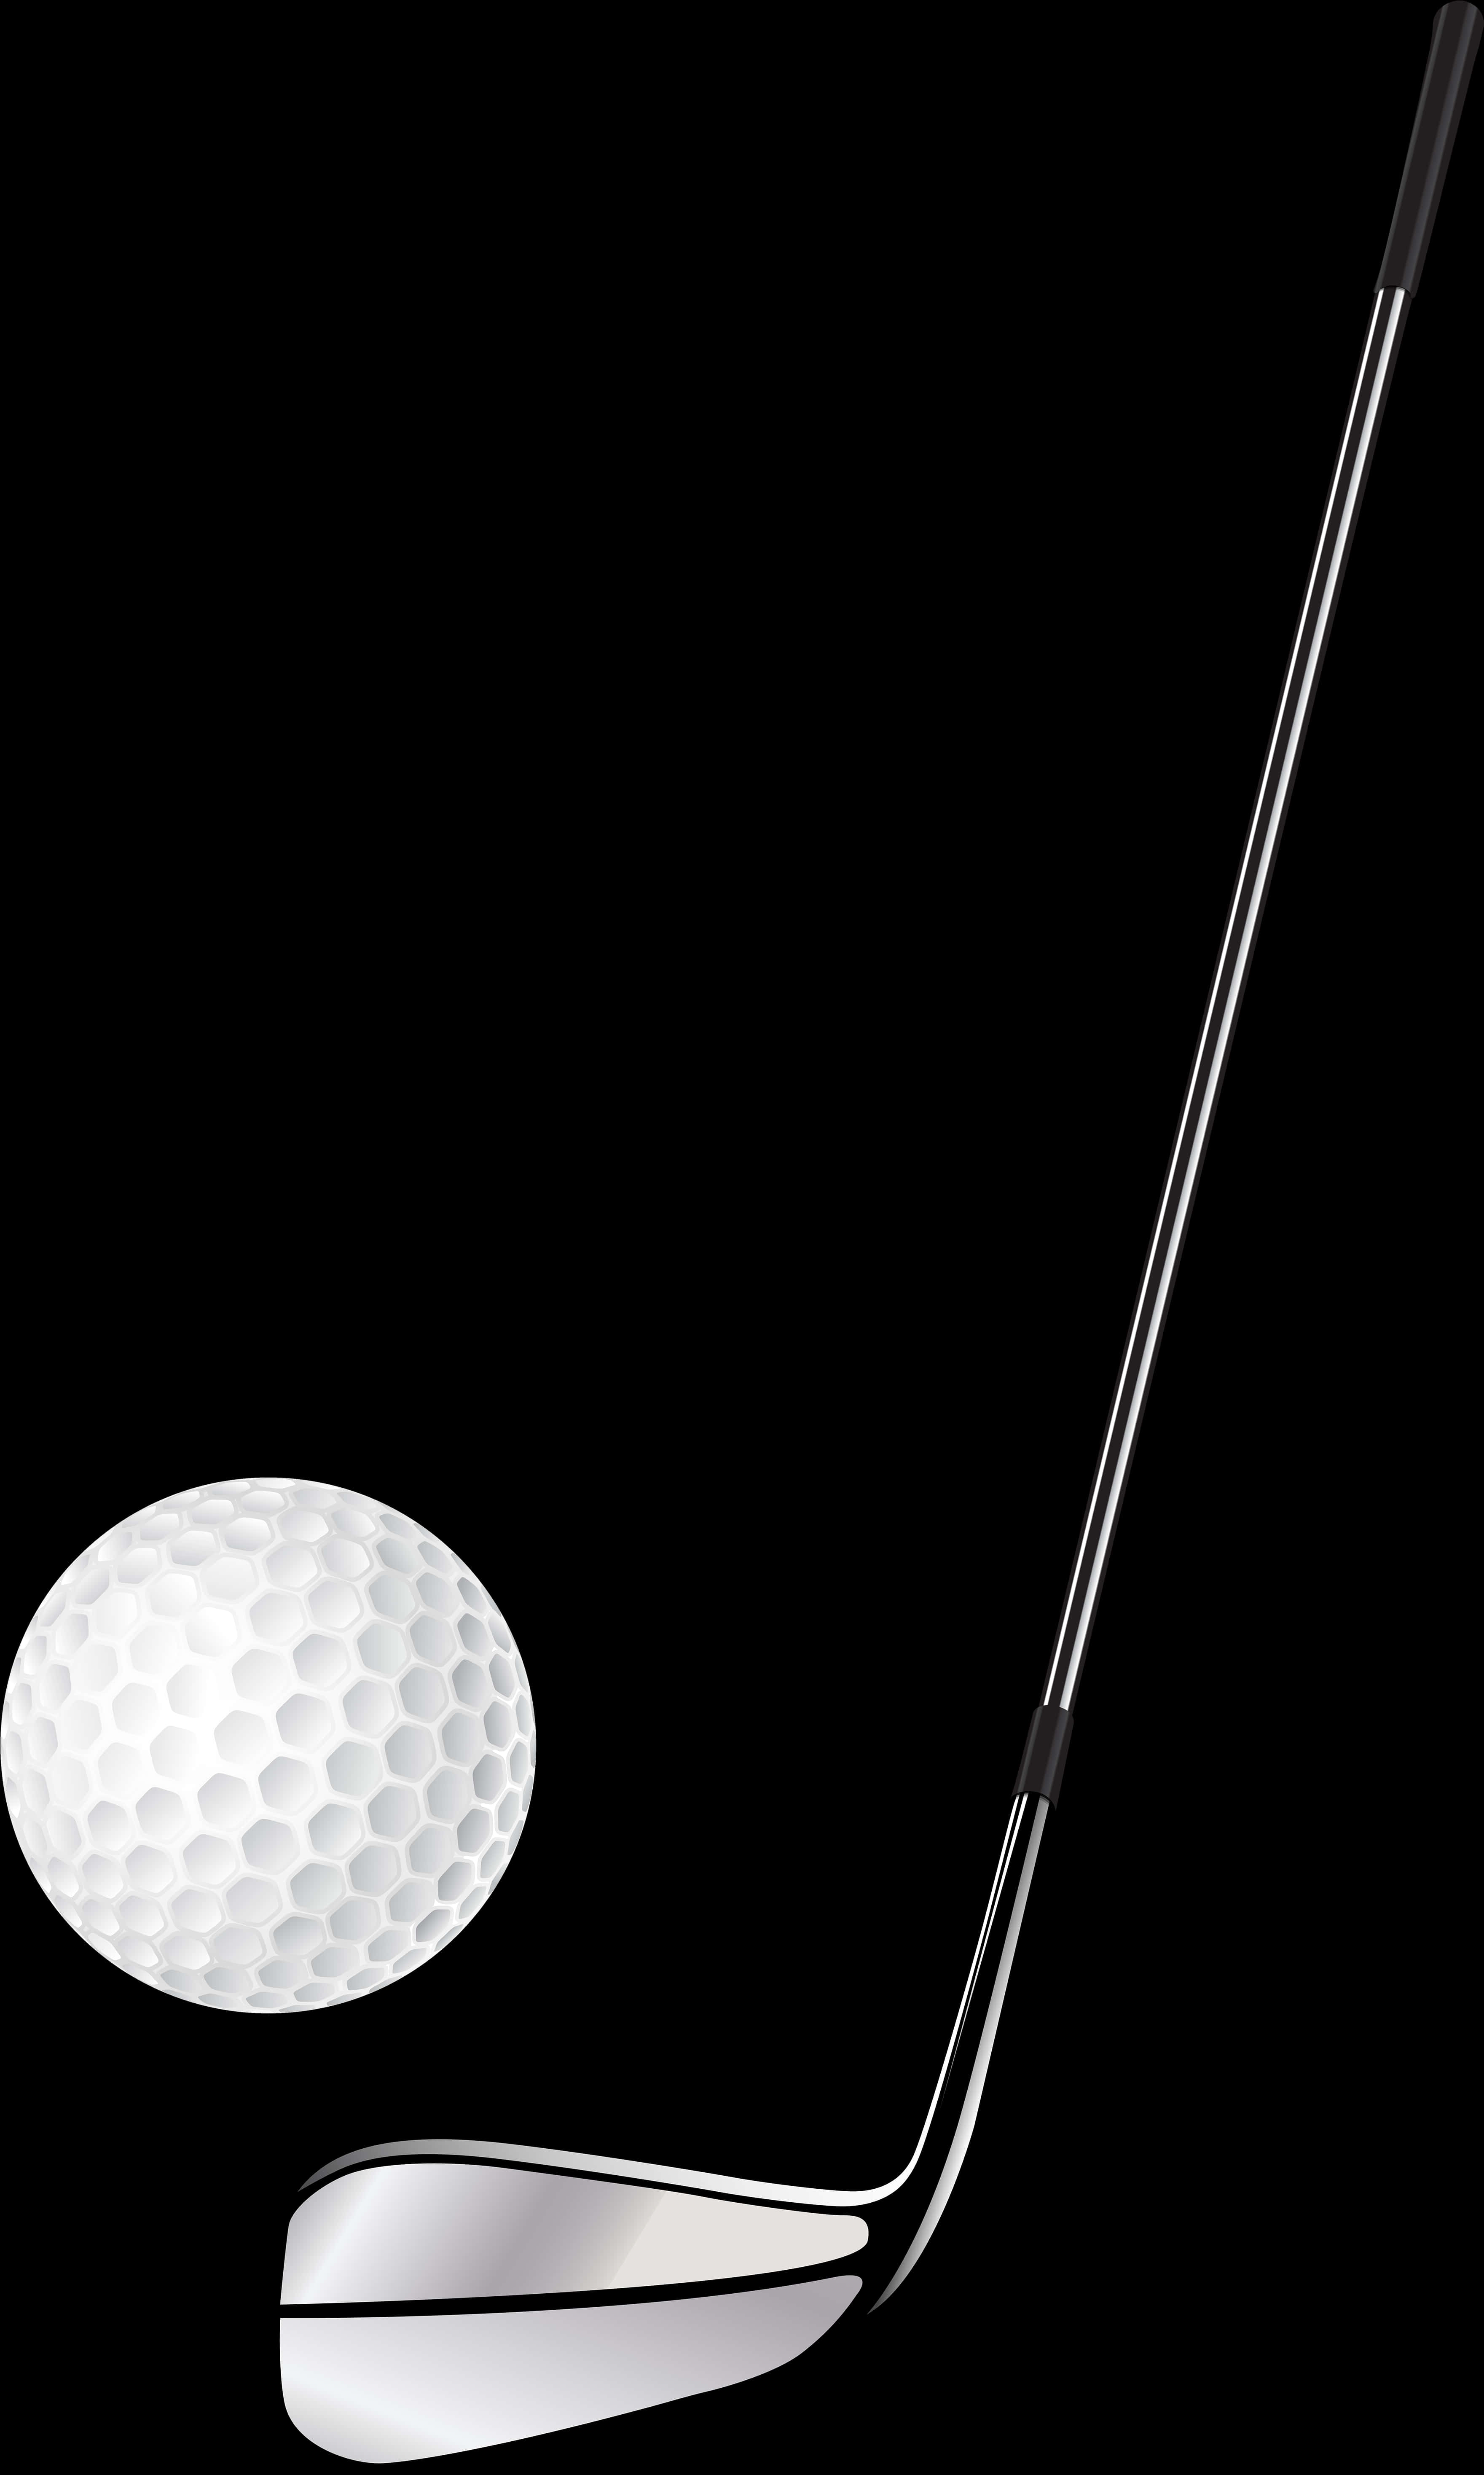 Golf Balland Clubon Black PNG image